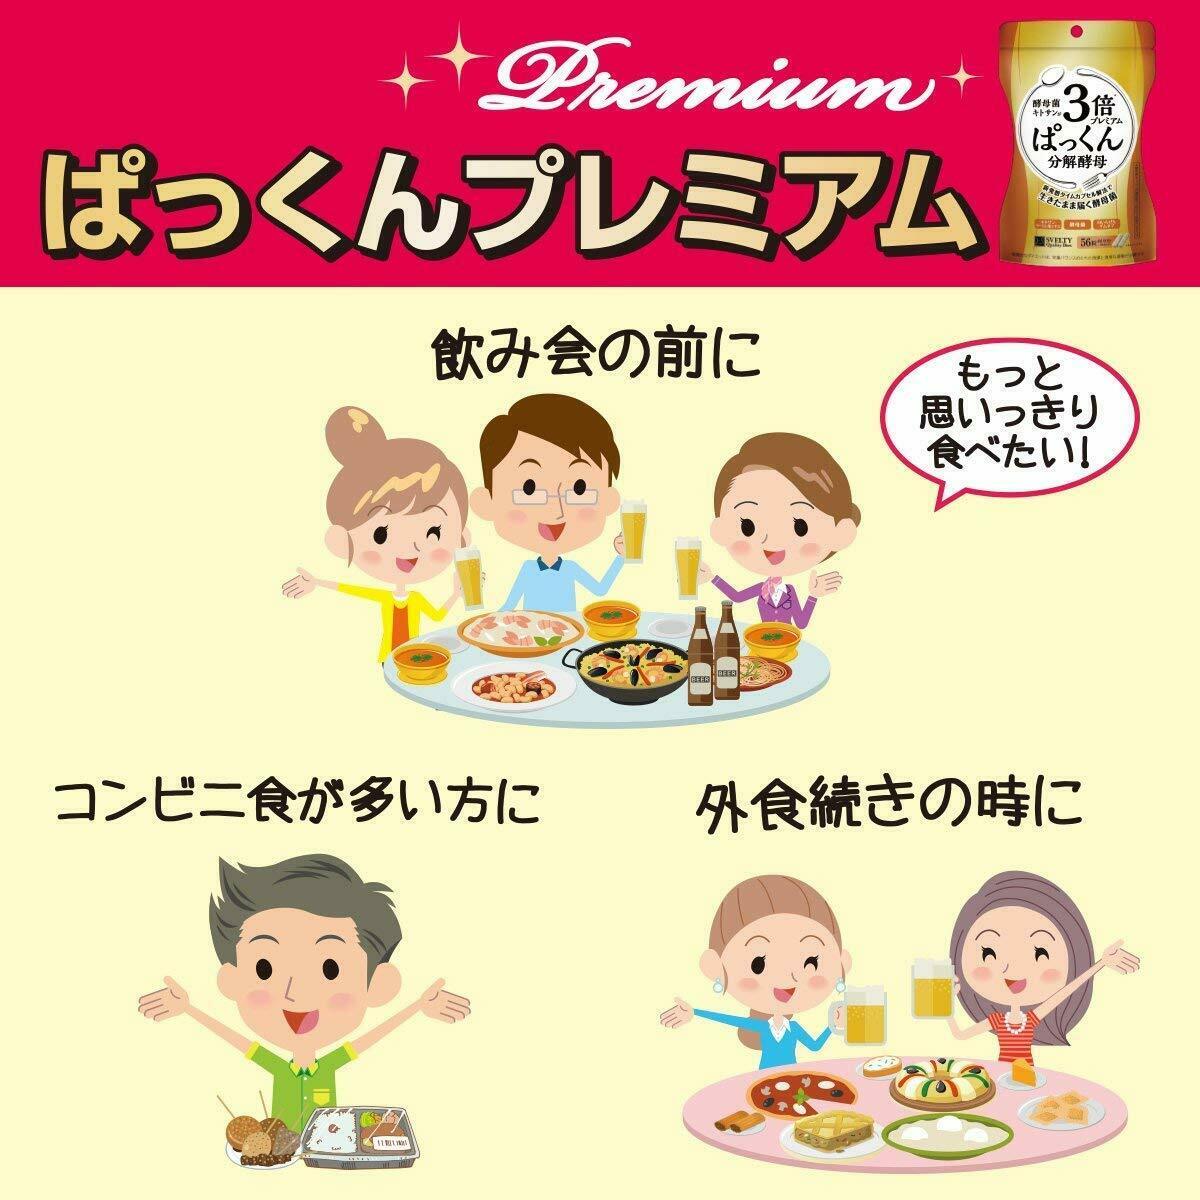 SVELTY 3 times Pakkun Decomposition Yeast 56 capsules Quality Diet JAPAN